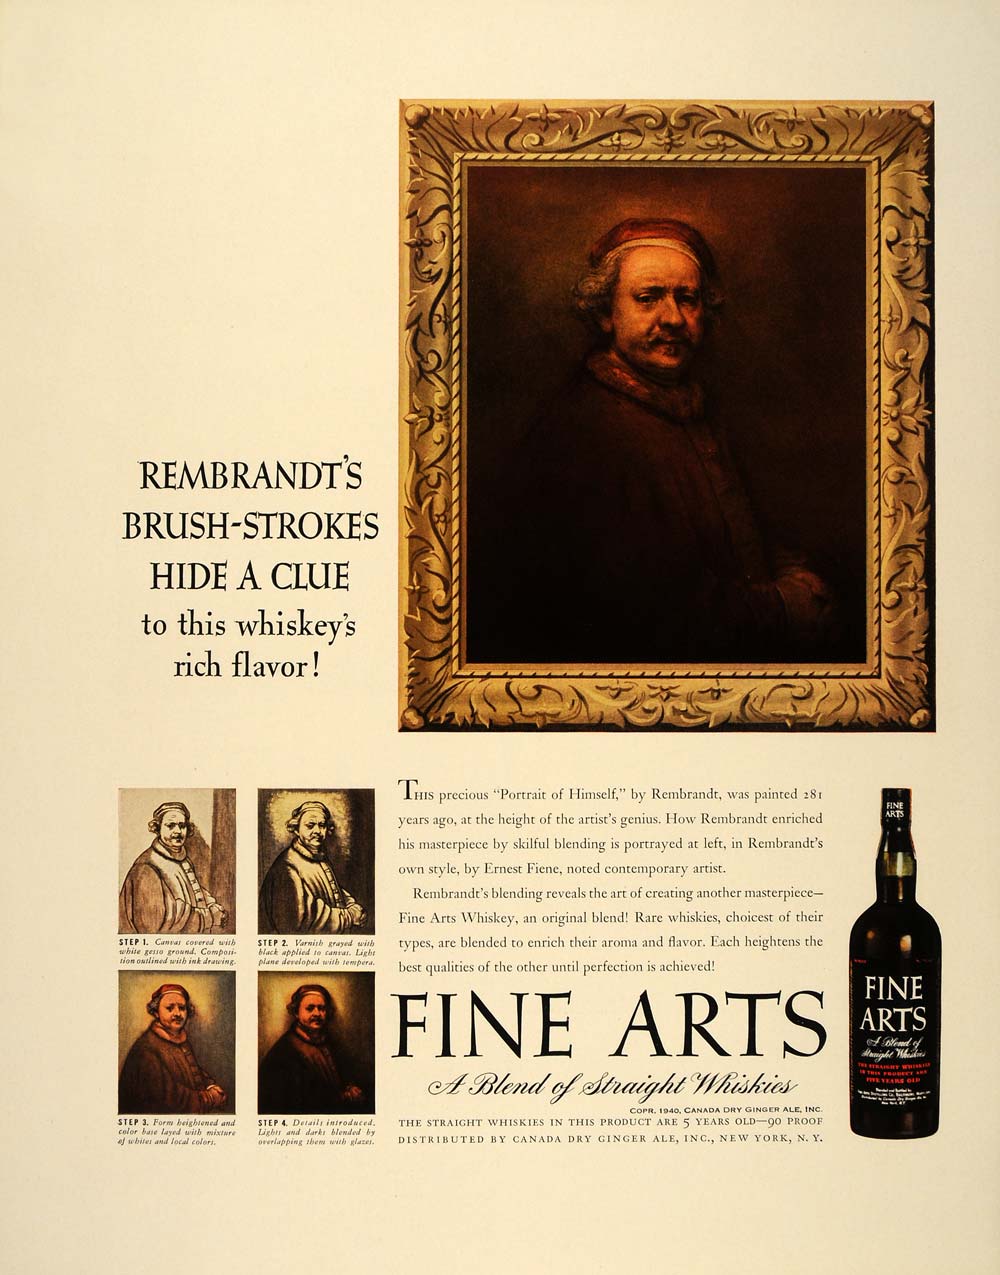 1940 Ad Fine Arts Whiskey Rembrandt Self Portrait - ORIGINAL ADVERTISING FT6